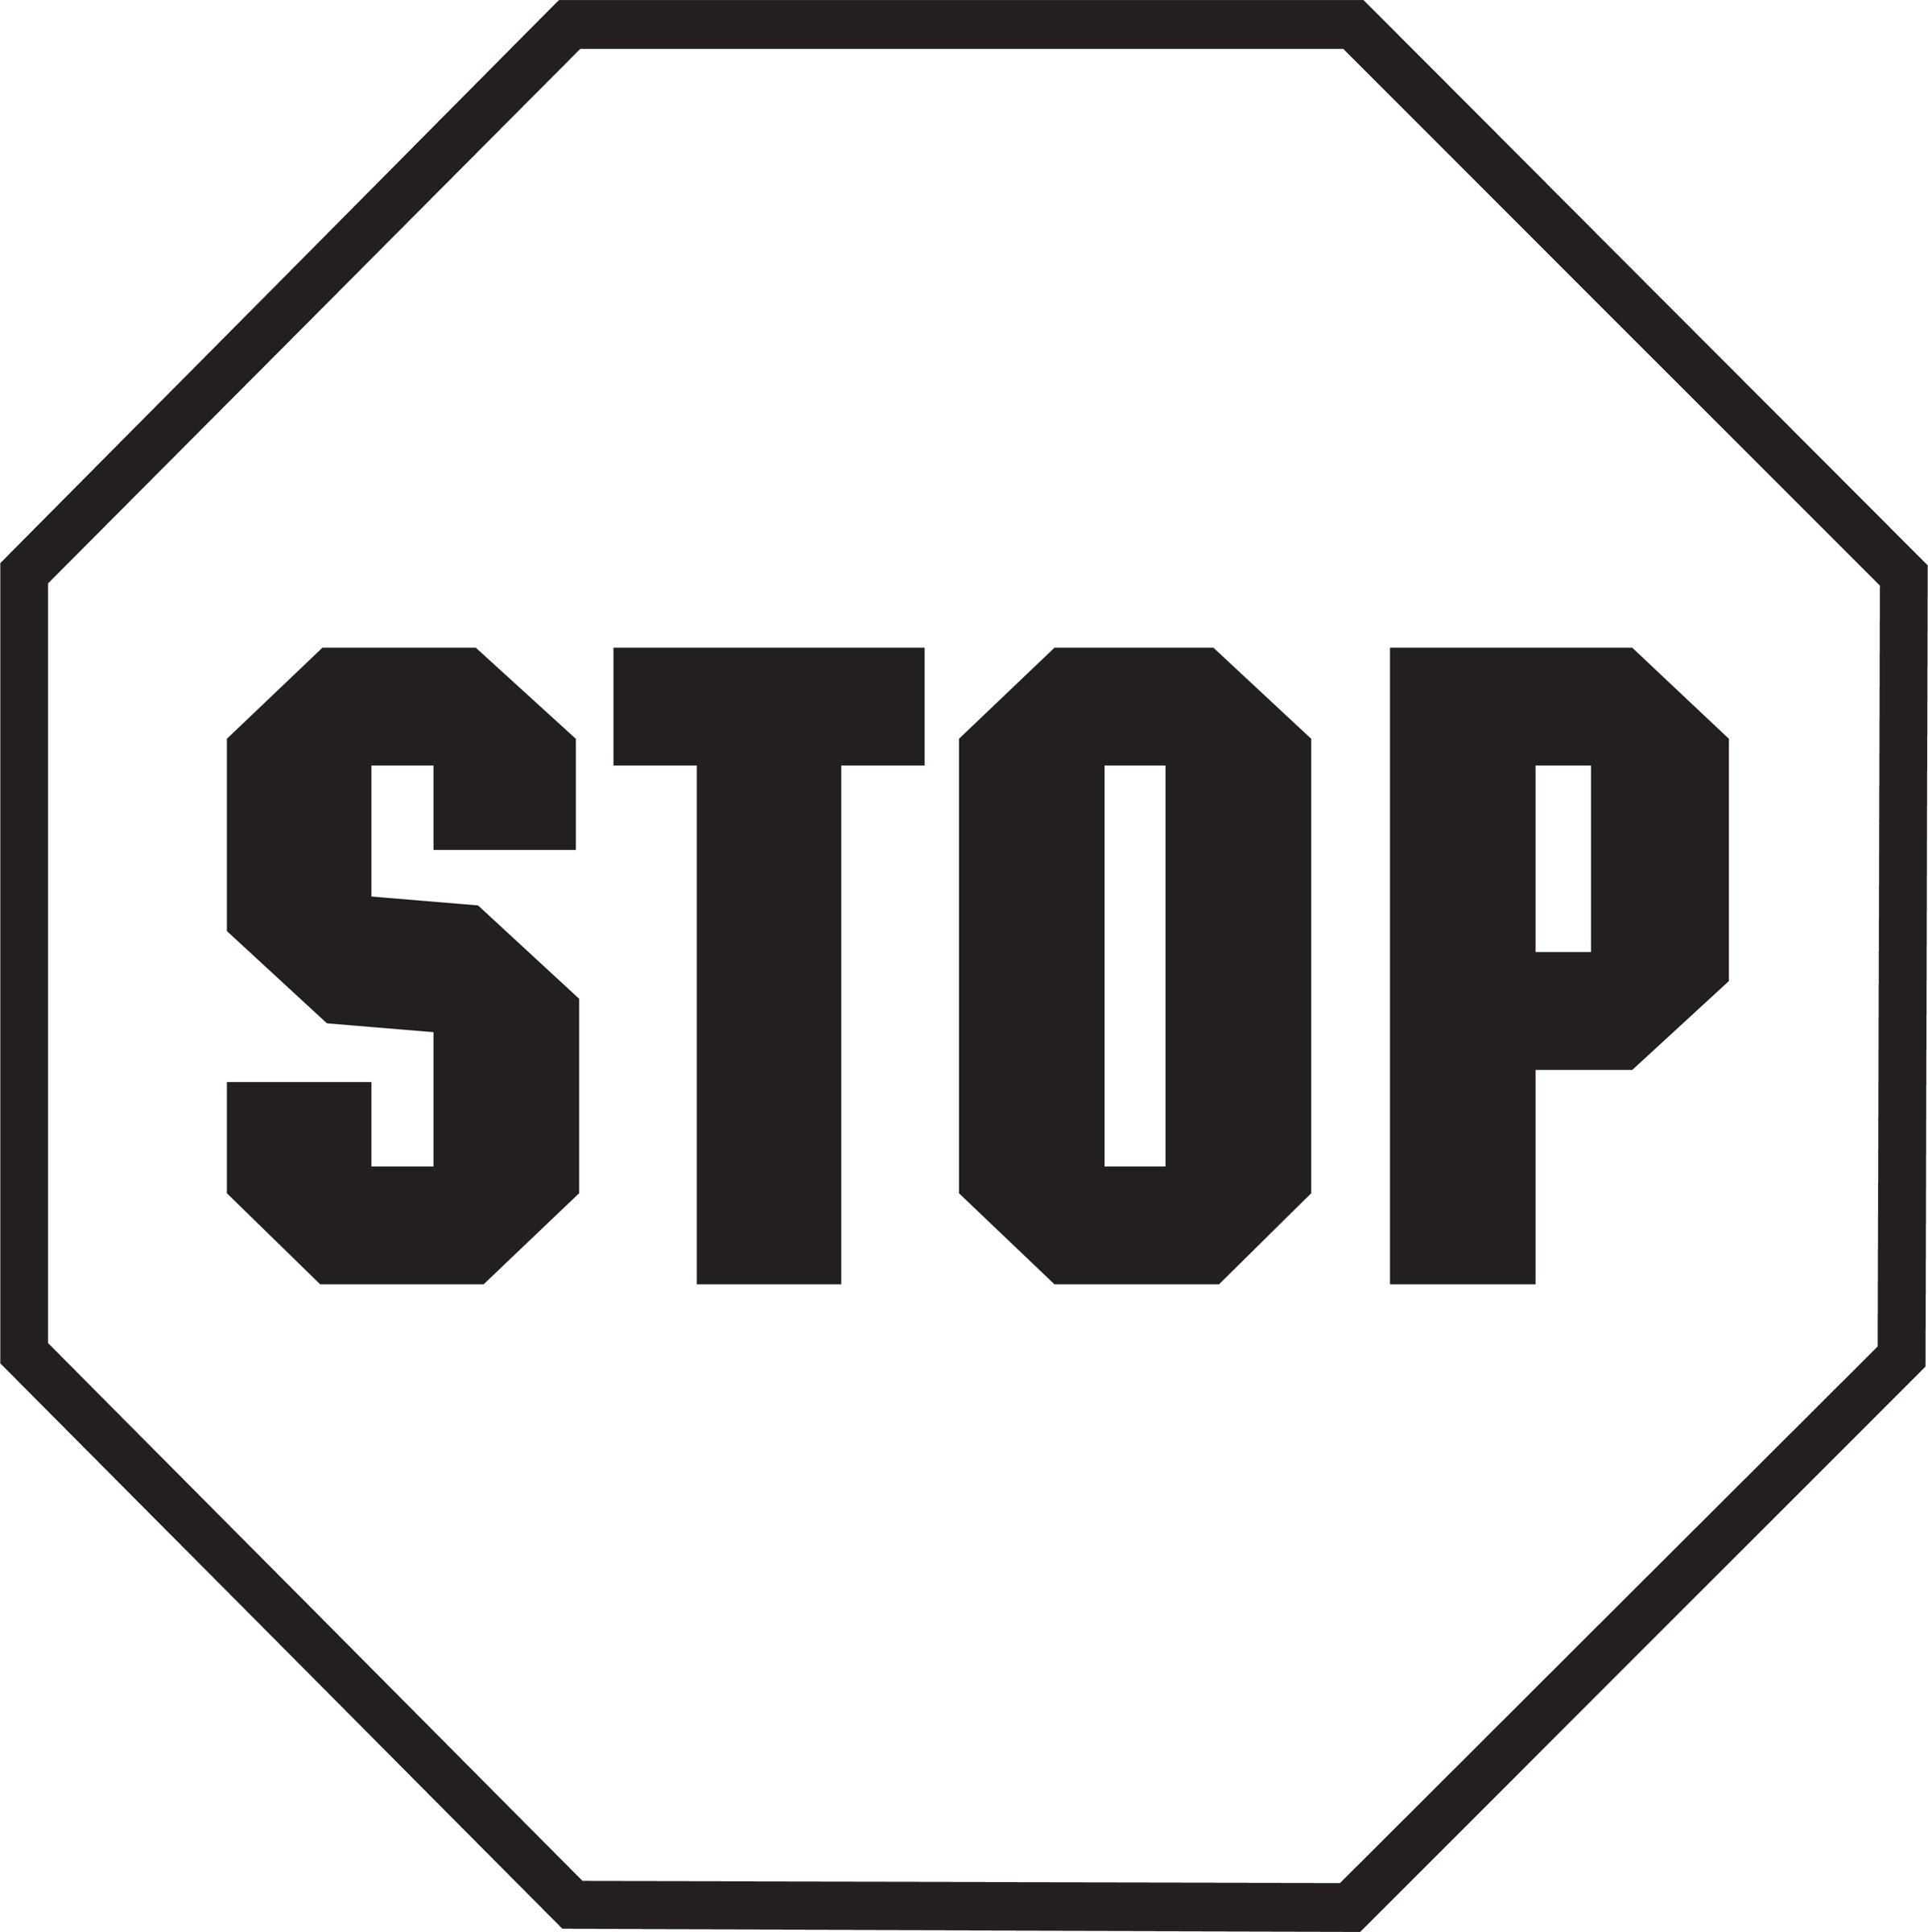 44 Free Stop Sign Clip Art - Cliparting.com